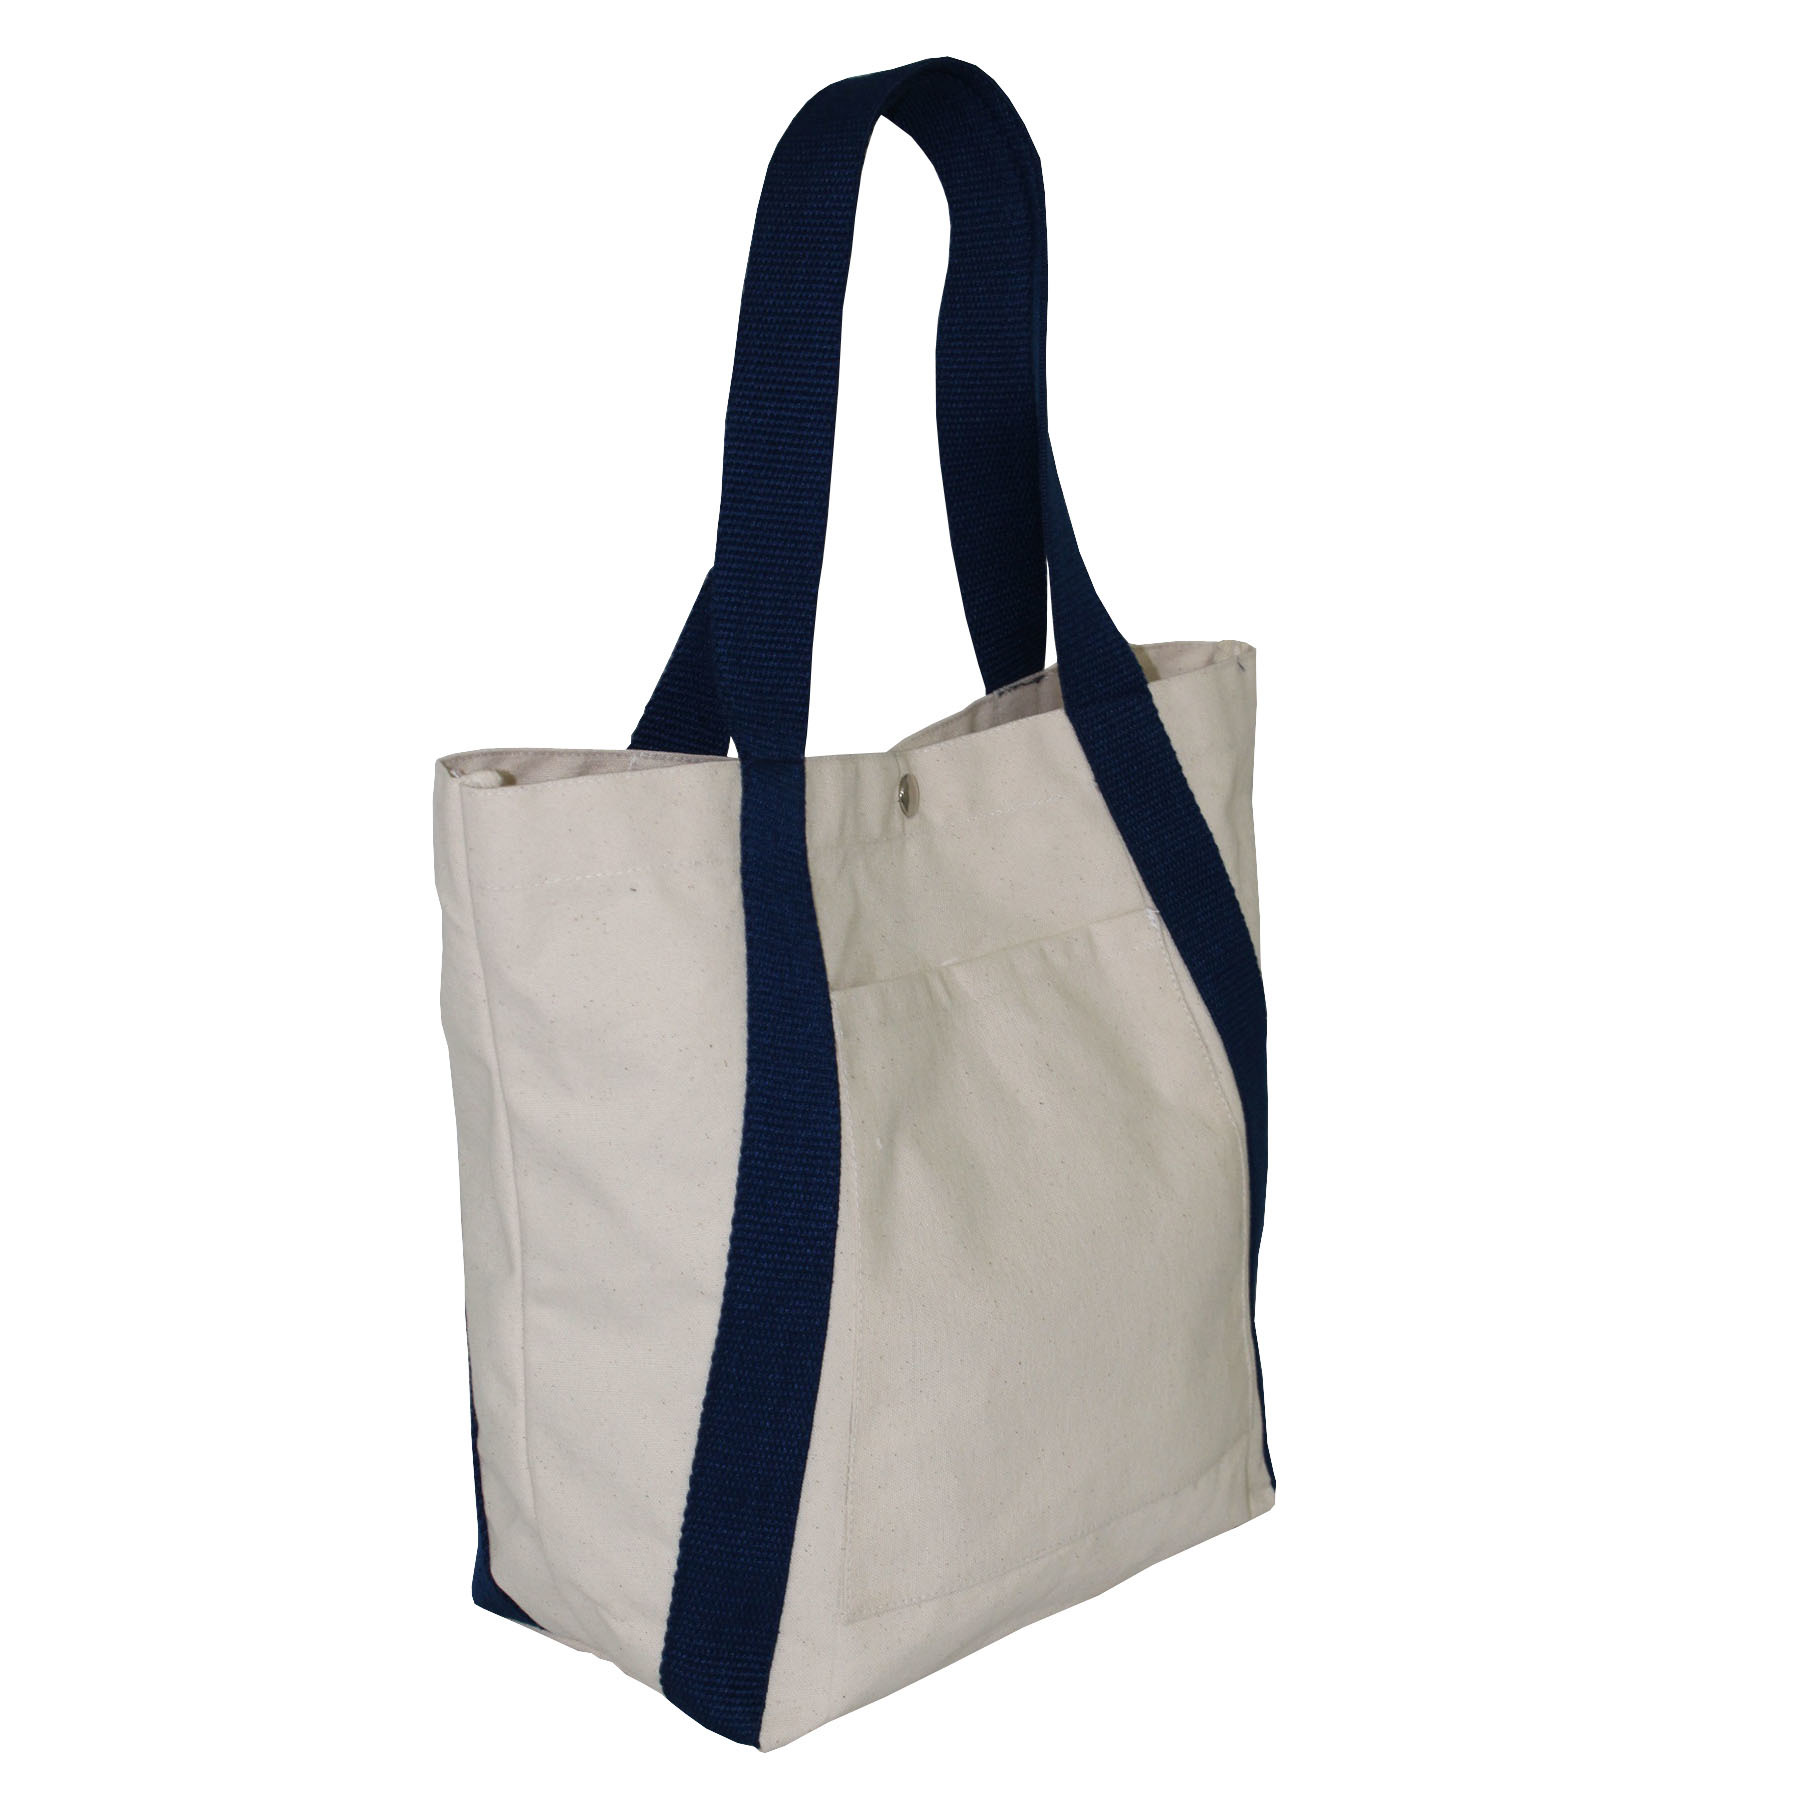 12 Oz Natural Canvas Bag With Web Handle